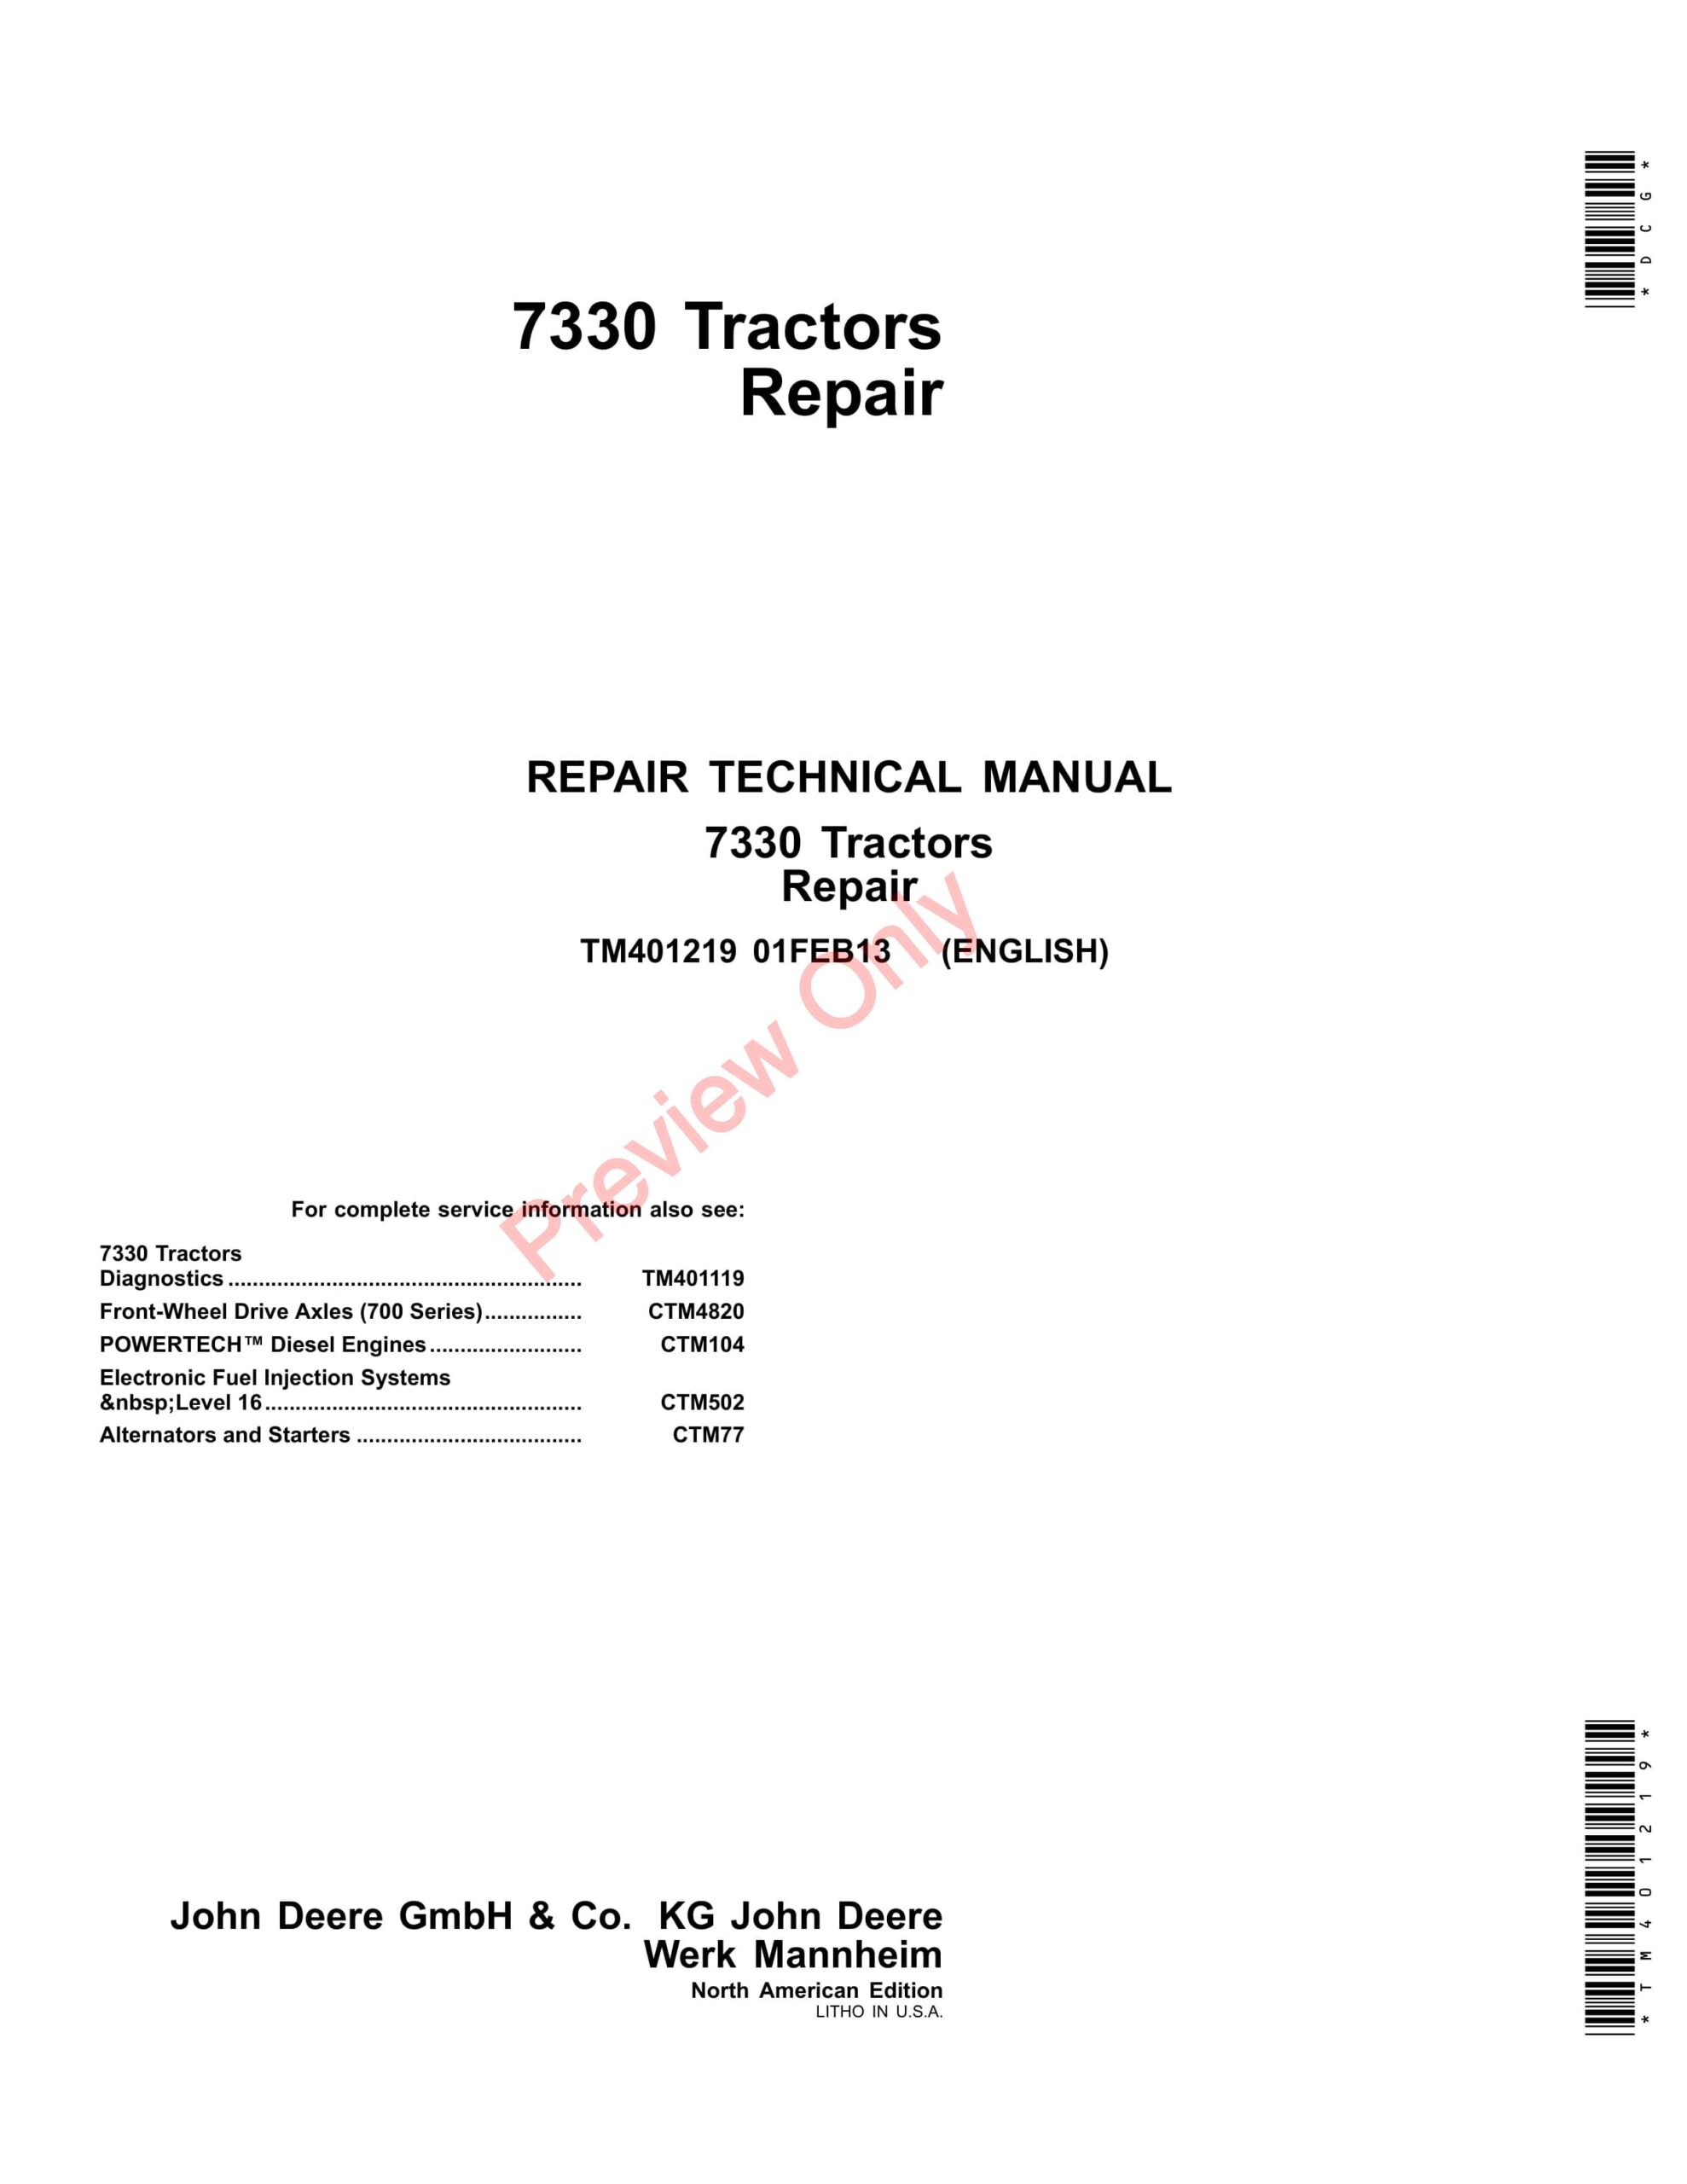 John Deere 7330 Tractors Technical Manual TM401219 01FEB13-1